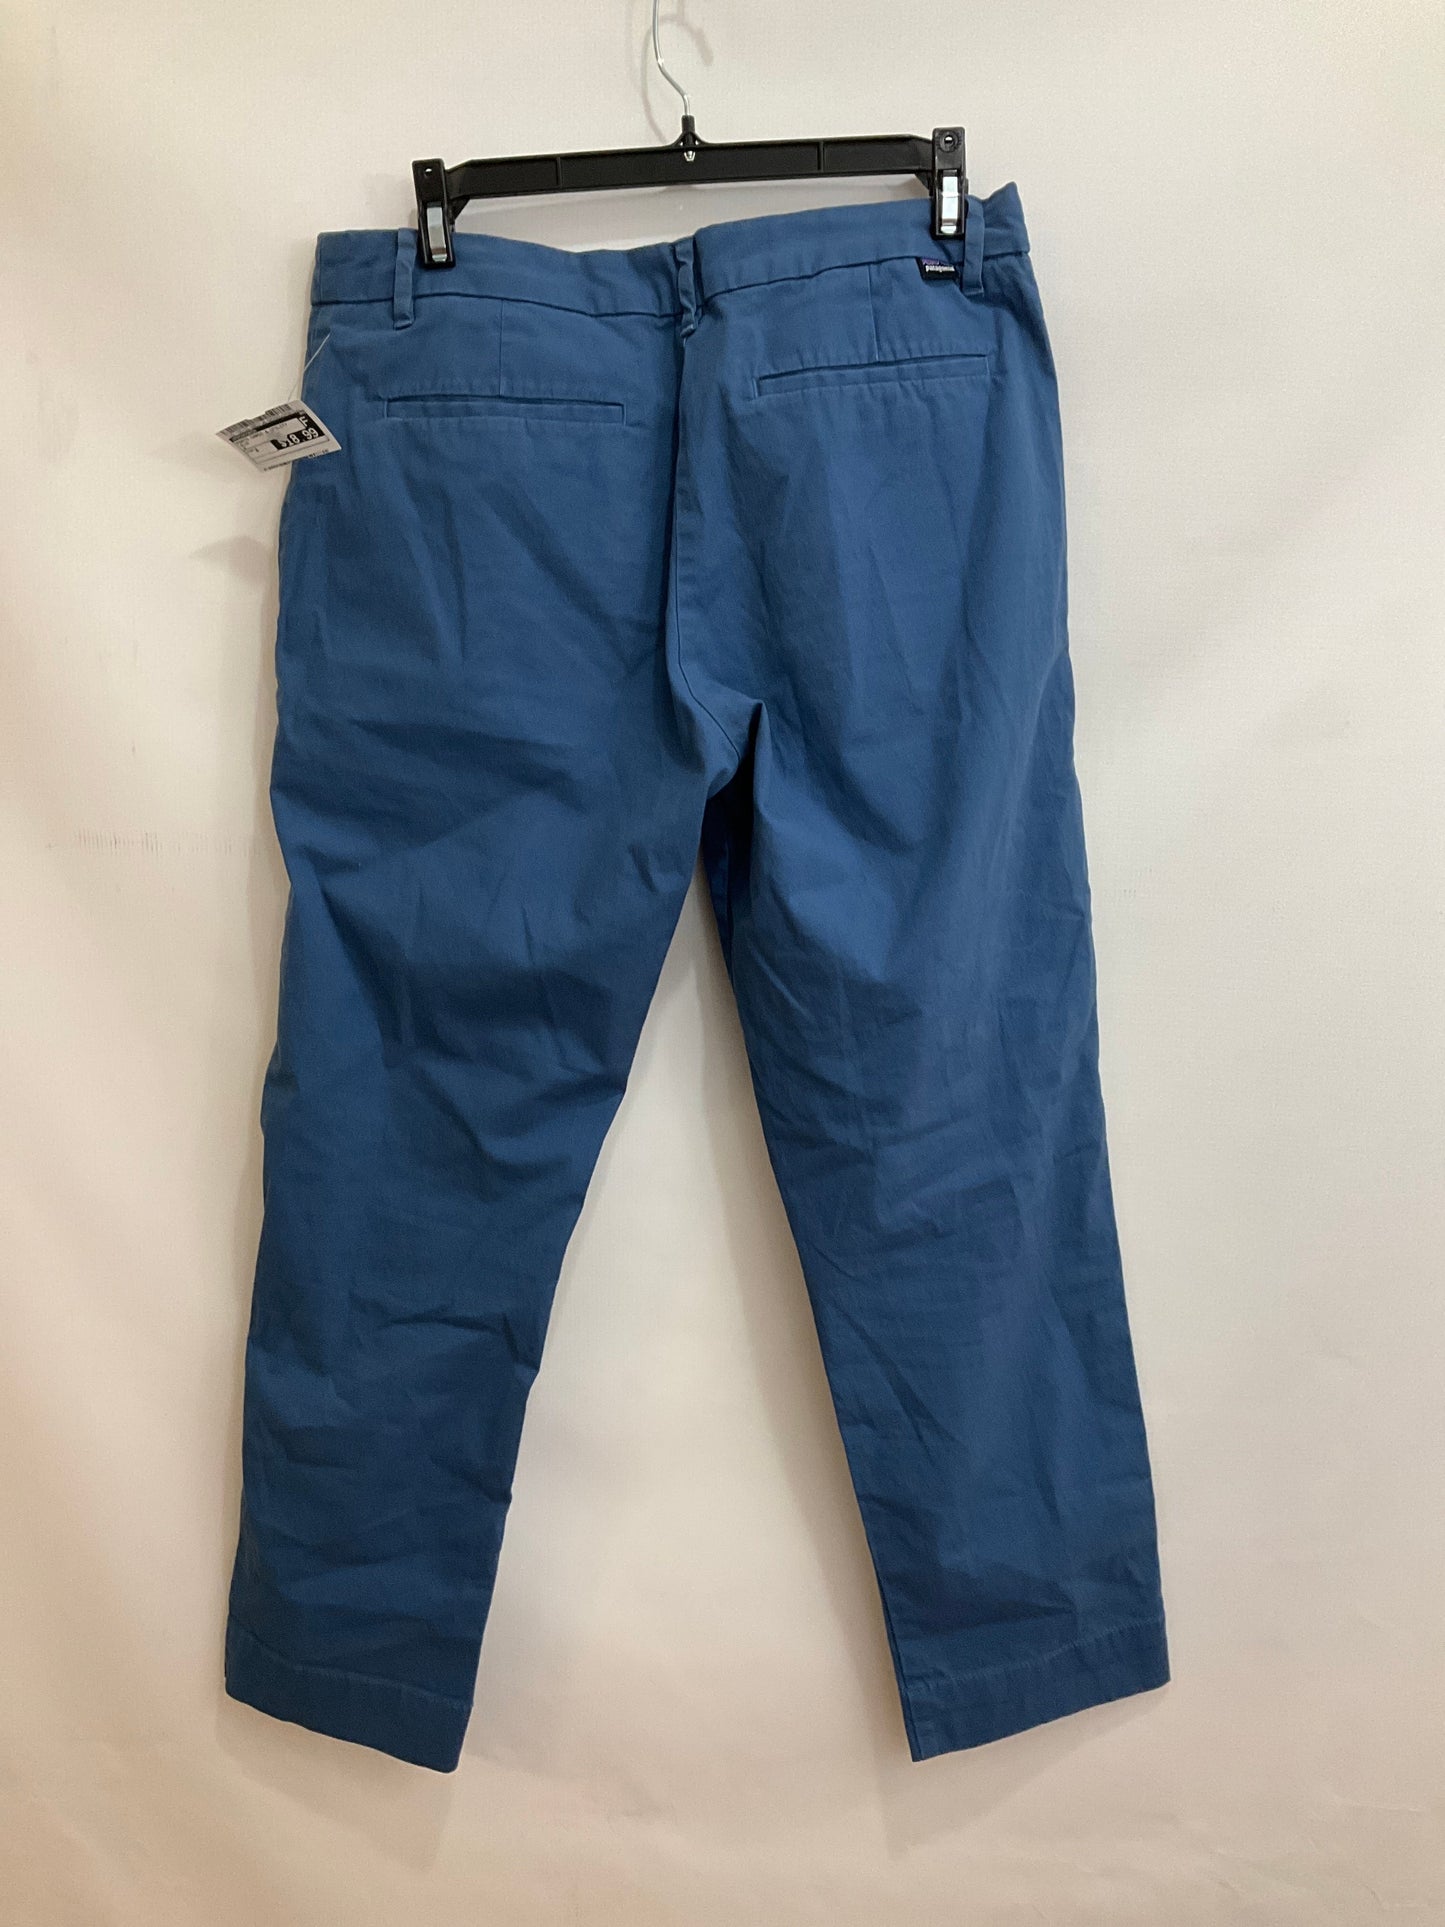 Blue Pants Cargo & Utility Patagonia, Size 8